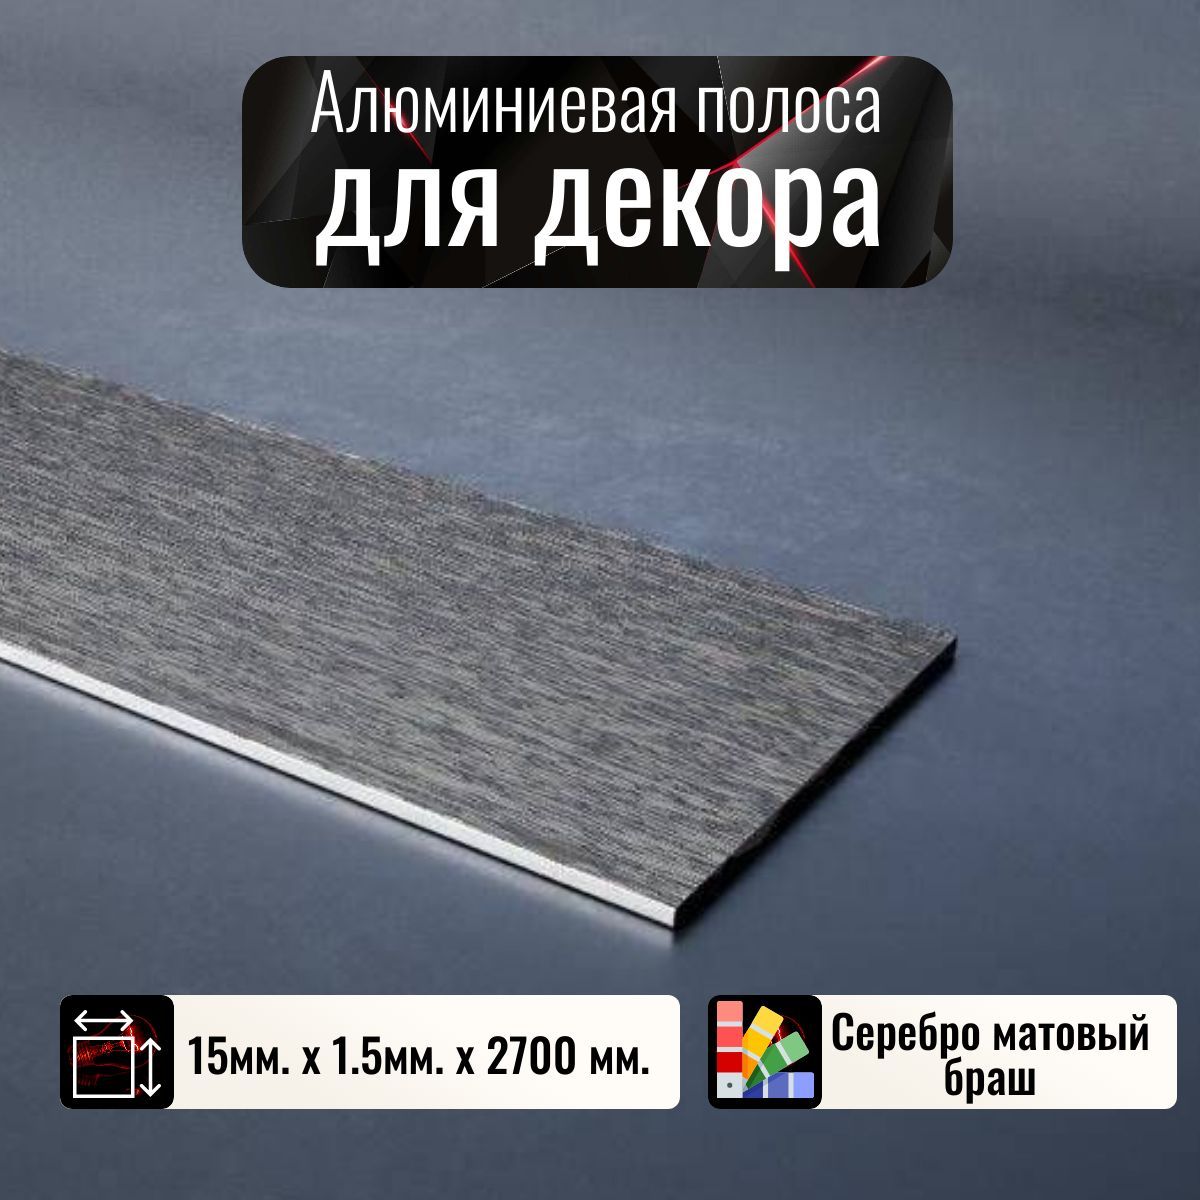 АлюминиеваяполосадекоративныймолдингDIELE15х1,5ммбрашсеребро/матдлина2,7м